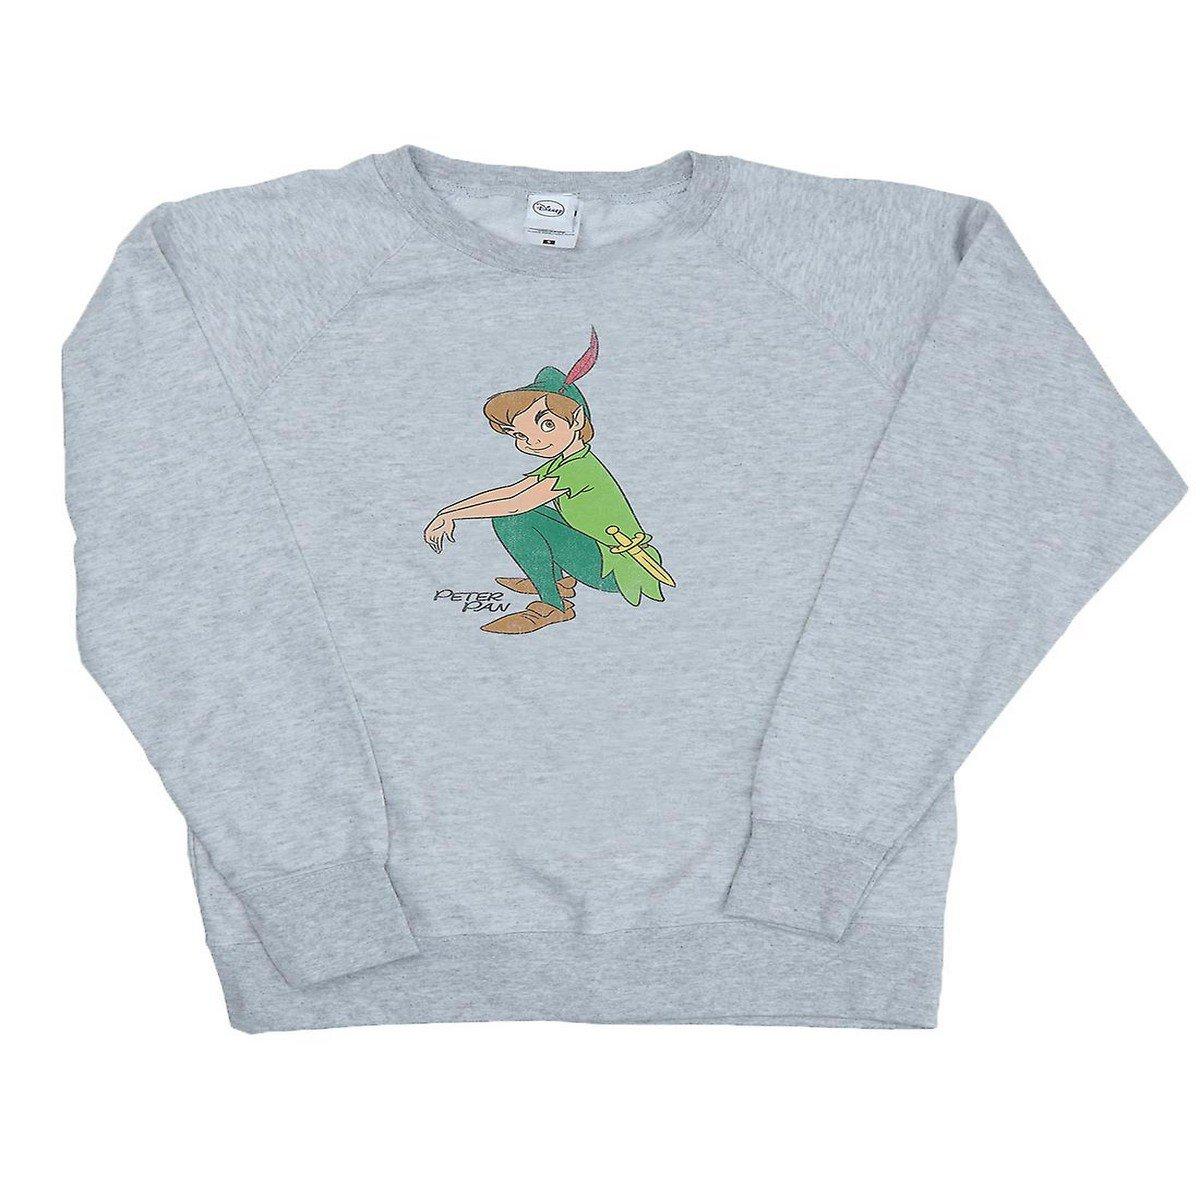 Classic Sweatshirt Damen Grau S von Peter Pan